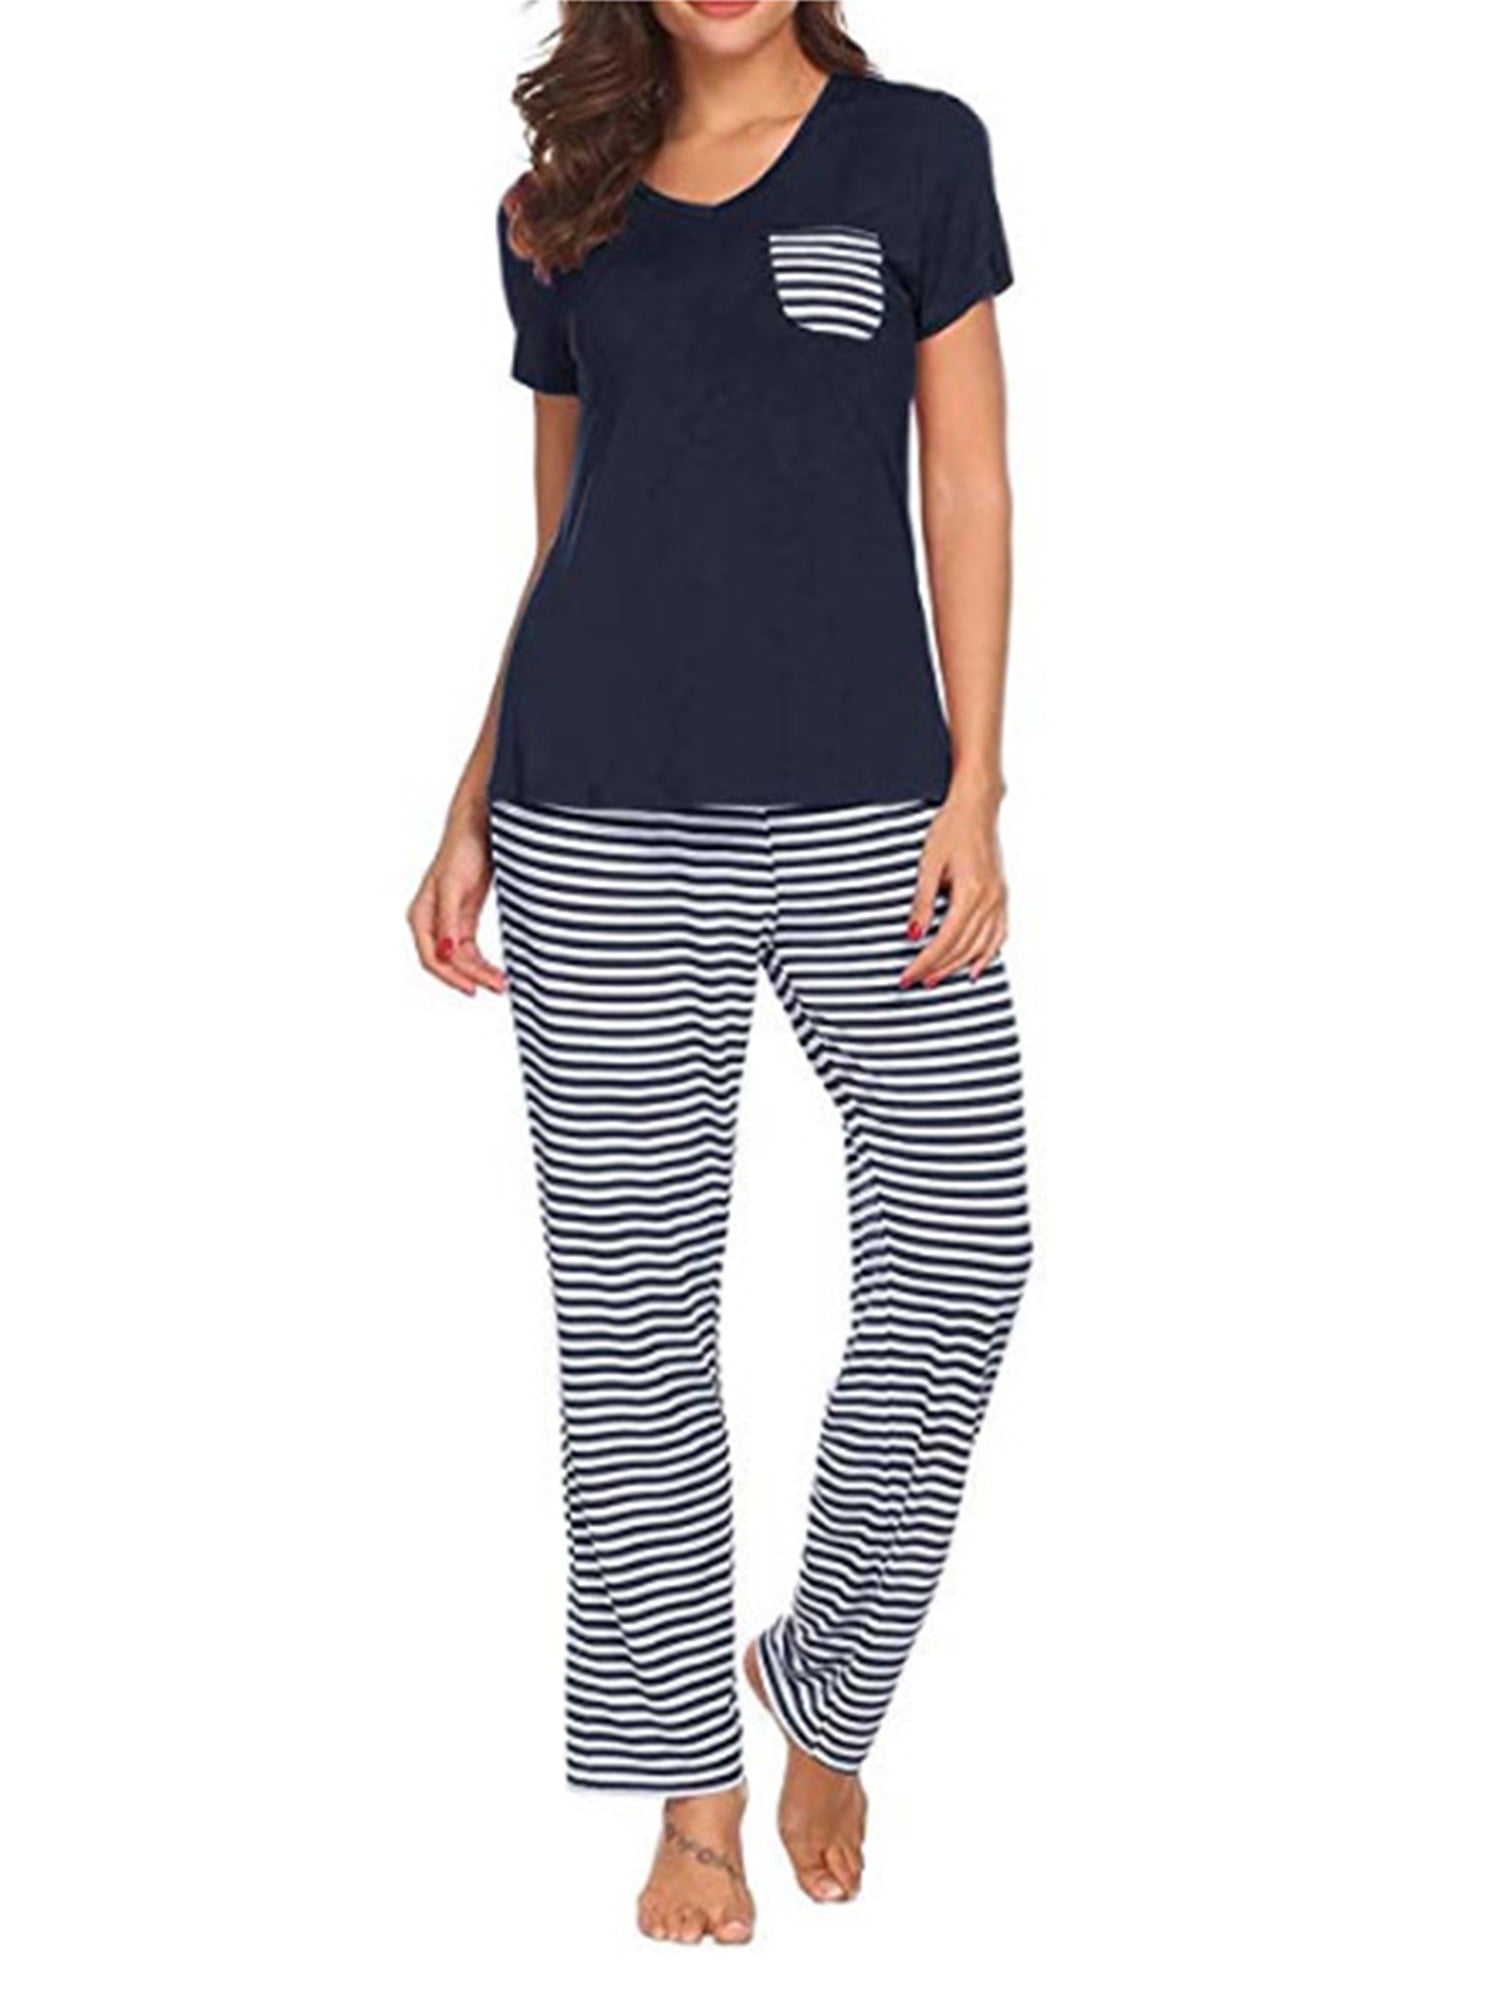 YYA Women's Pajama Set Short Sleeve Top with Long Pants sleepwear Sets Comfy Pjs S-XXL 